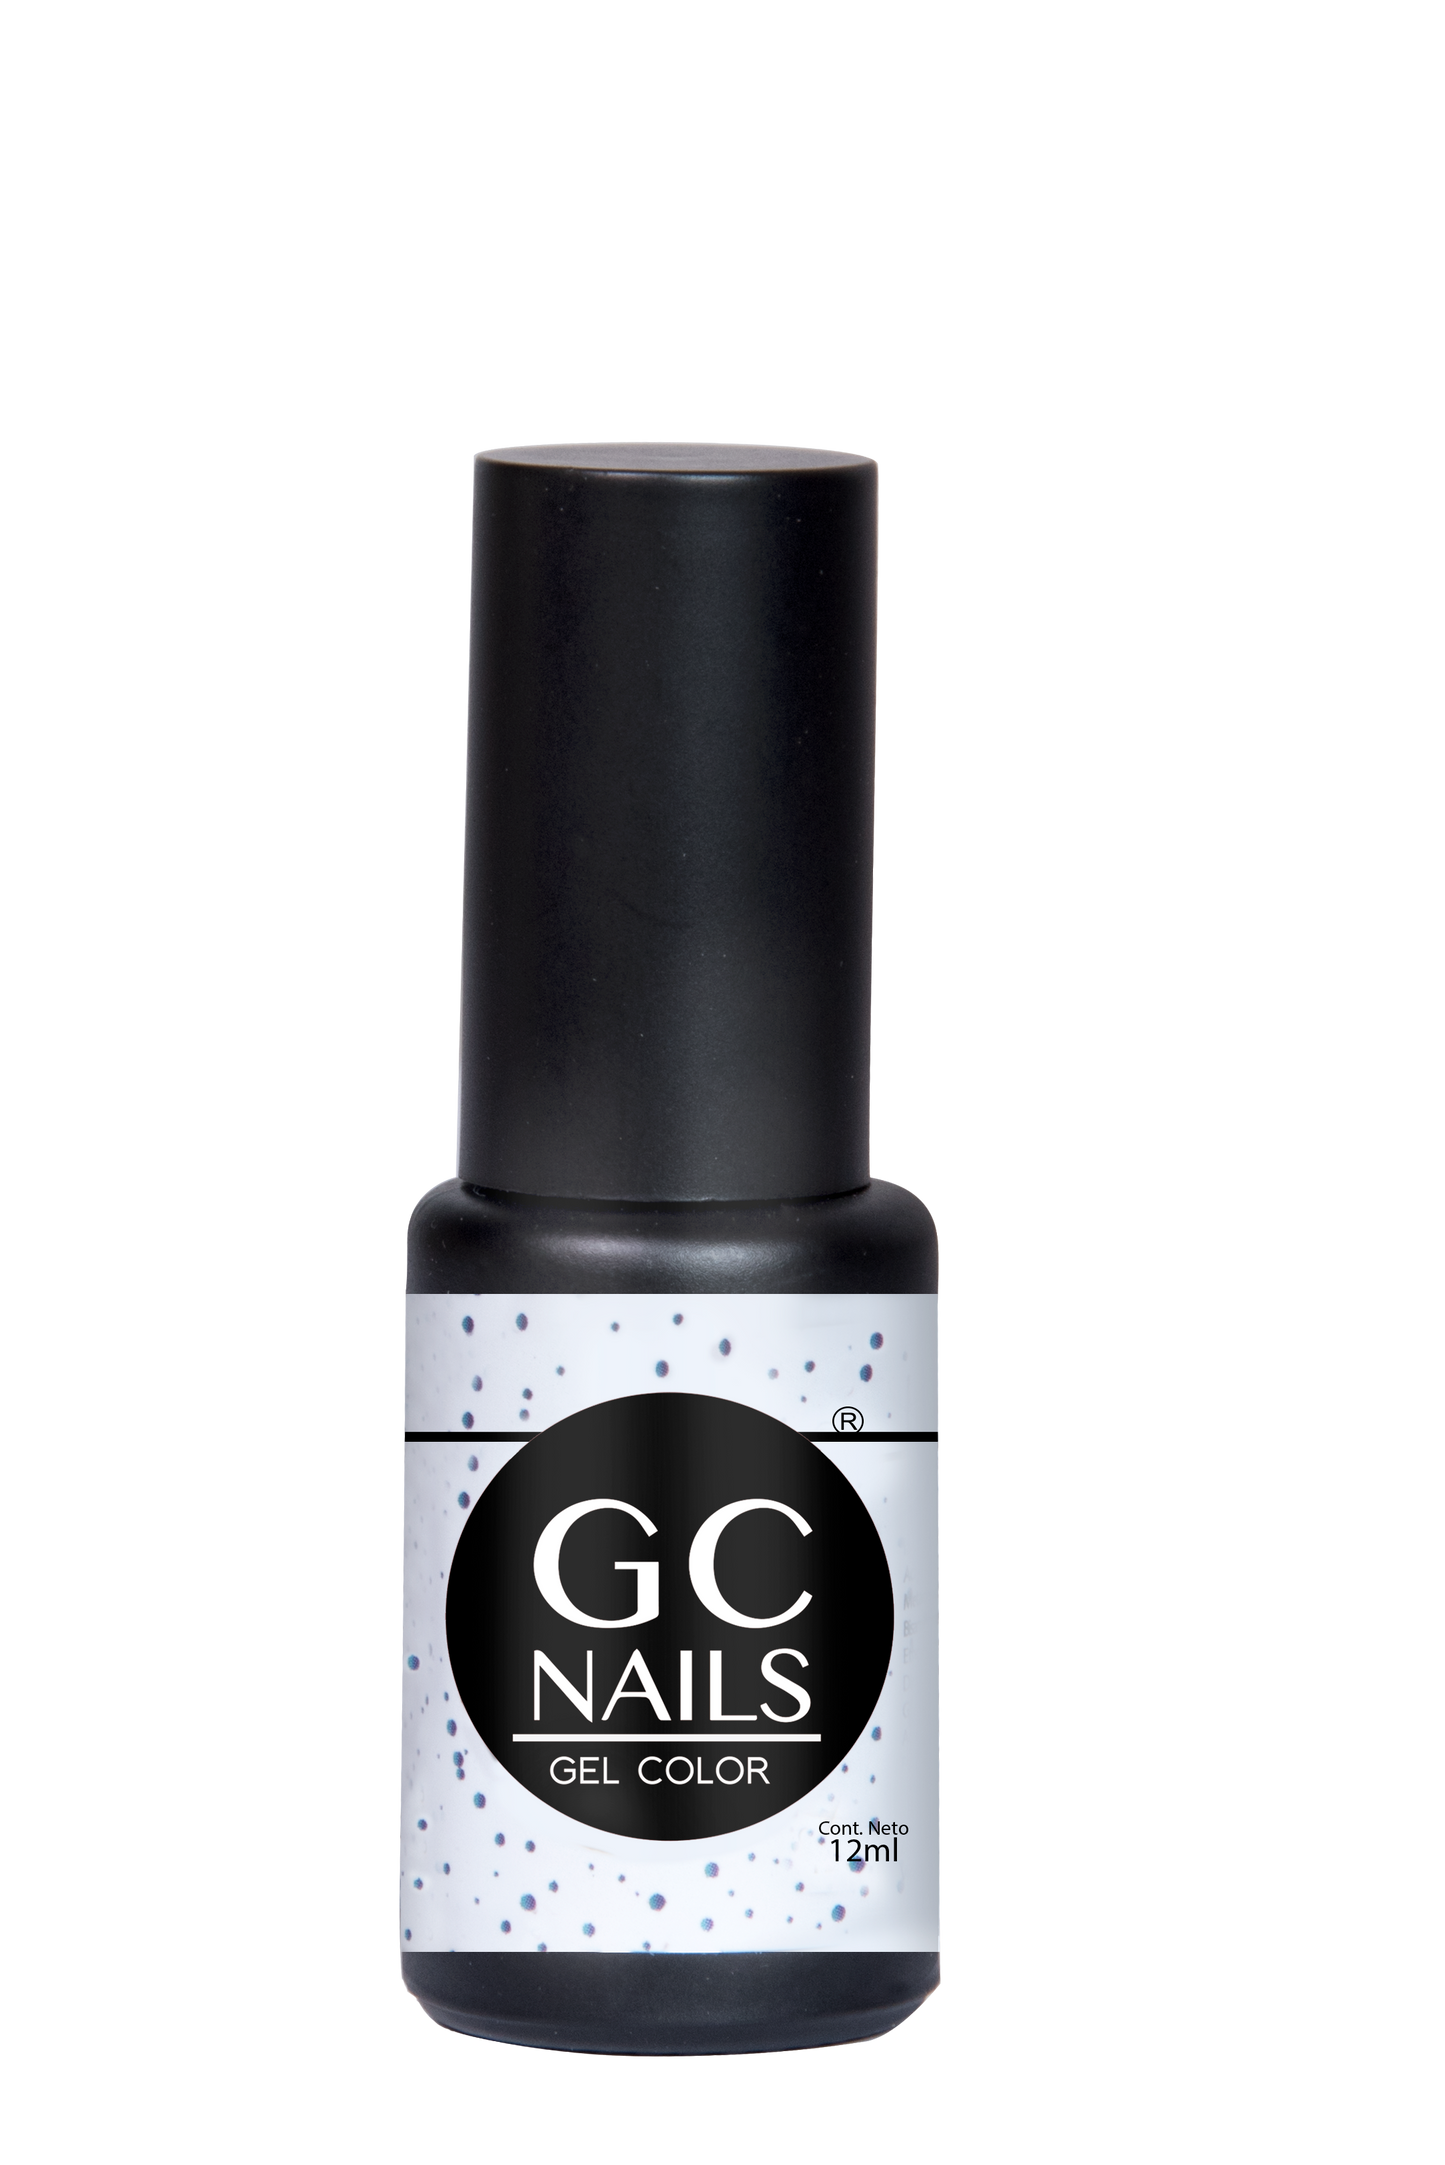 GC nails bel-color 12ml AURA 104